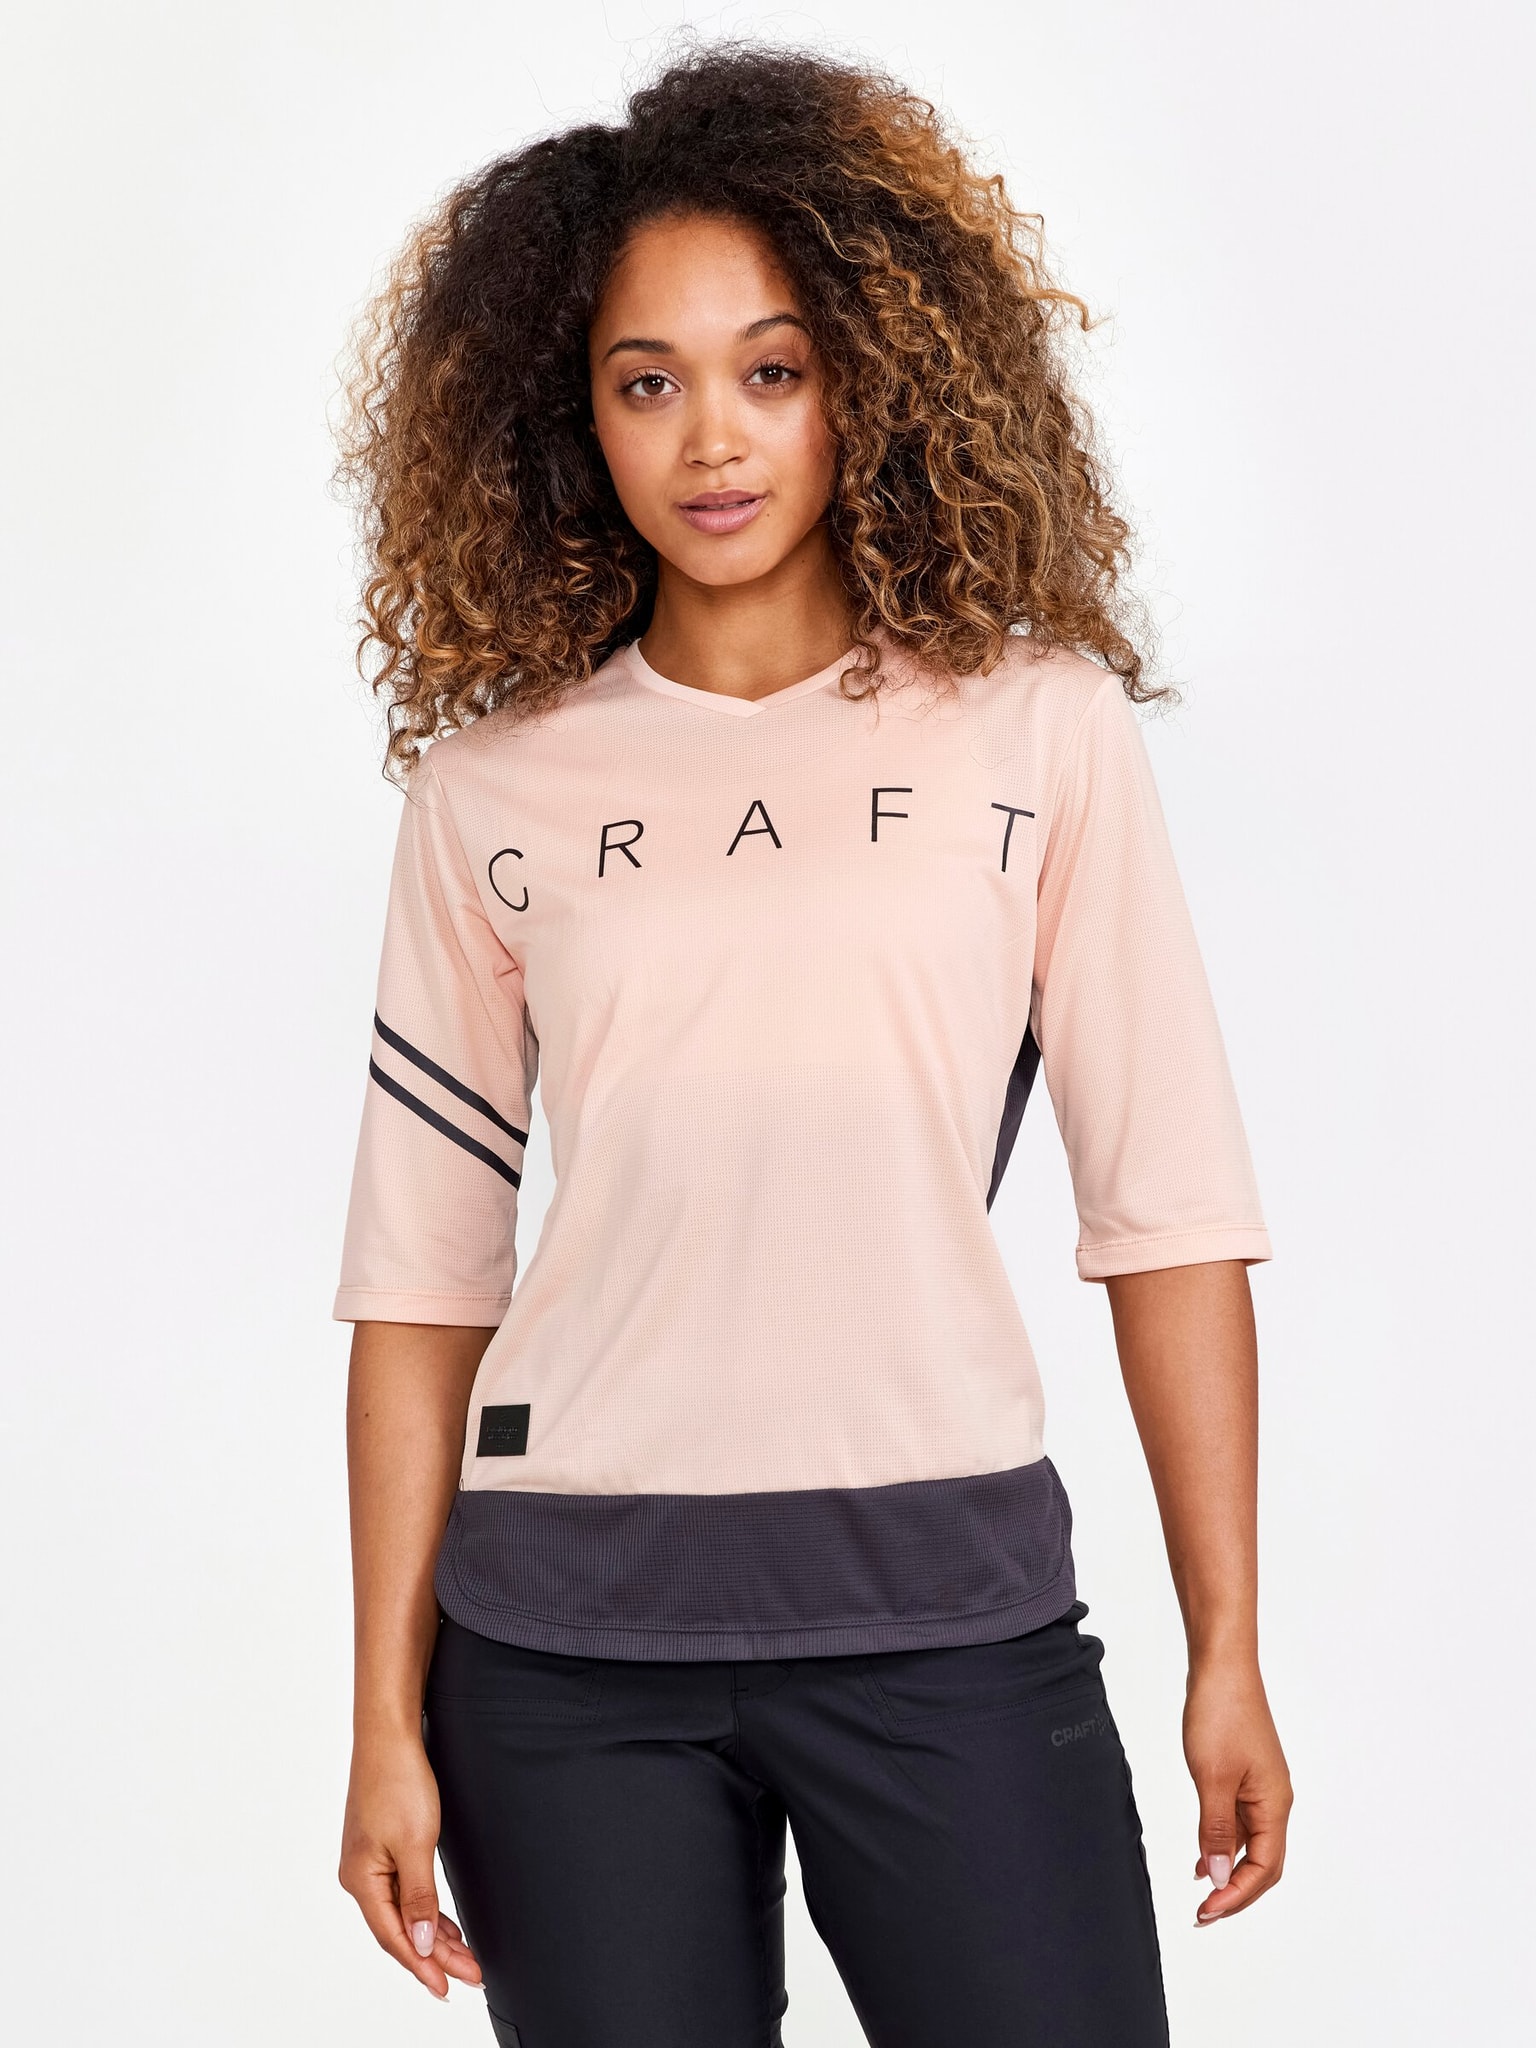 Craft Craft Core Offroad XT SS Jersey Maglietta da bici rosa-c 5